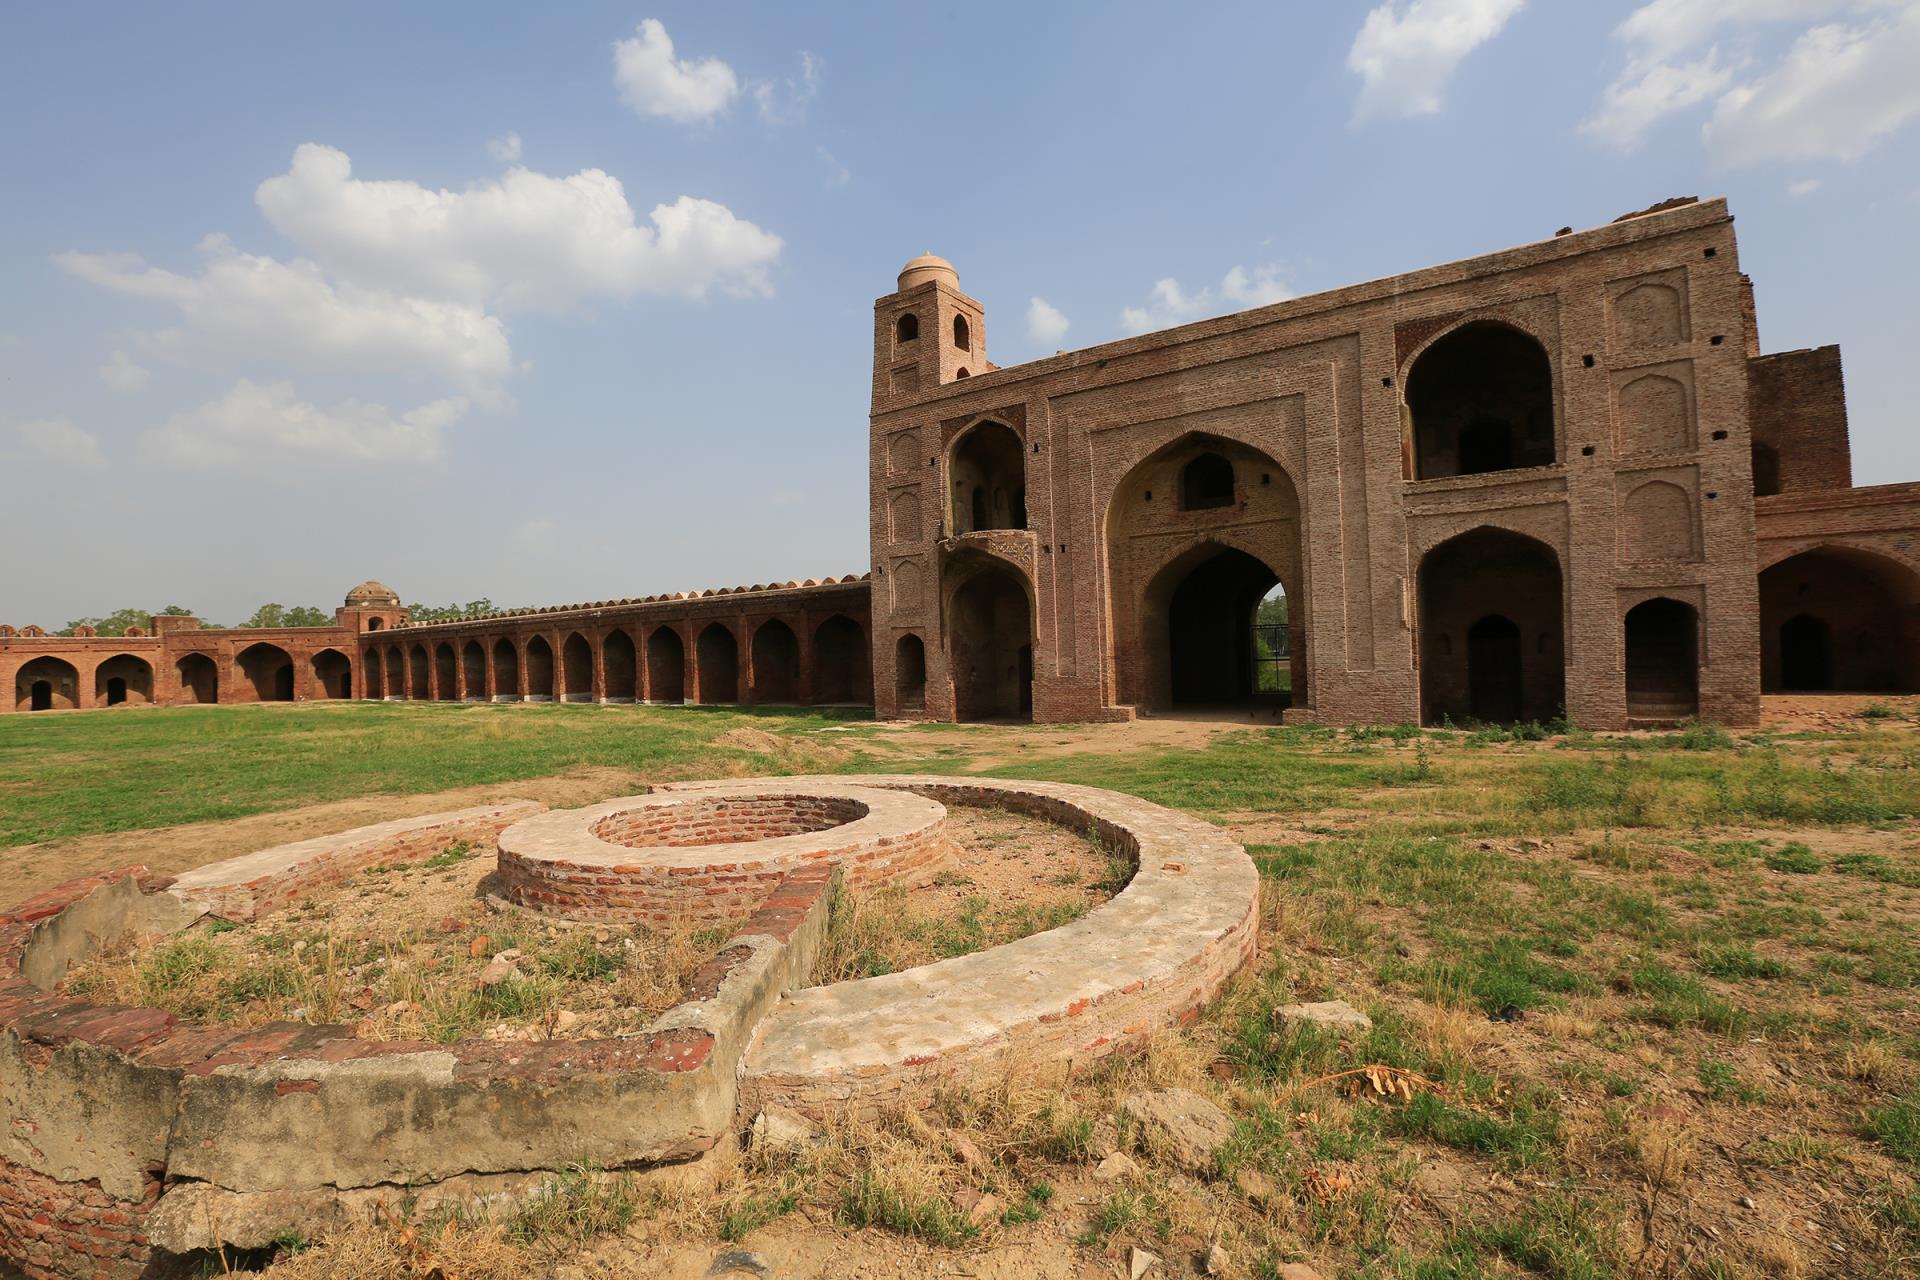 Bahadurgarh Fort - Bahadurgarh shows the culture of Punjab